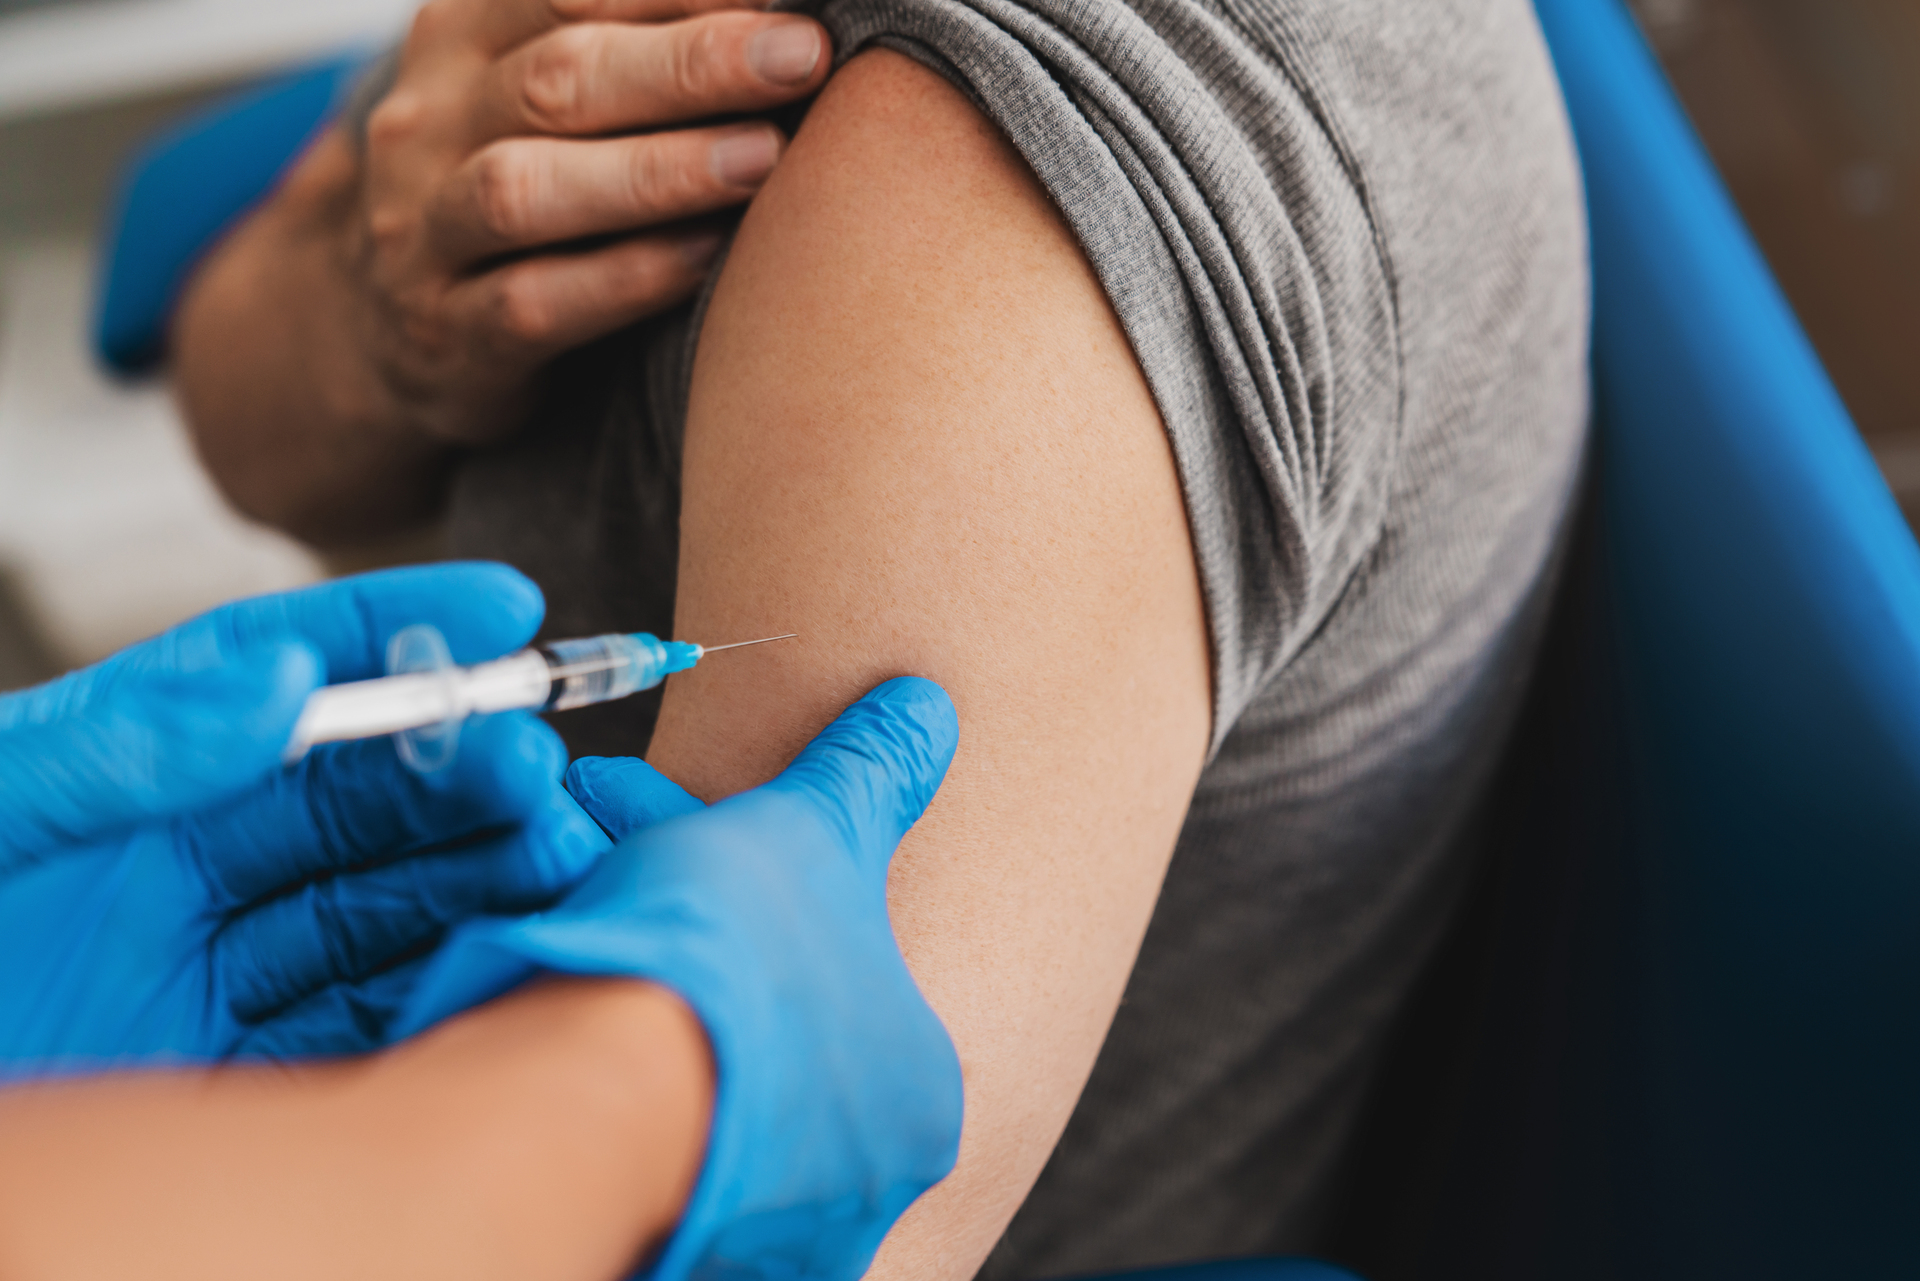 
                an arm receiving an injection
              